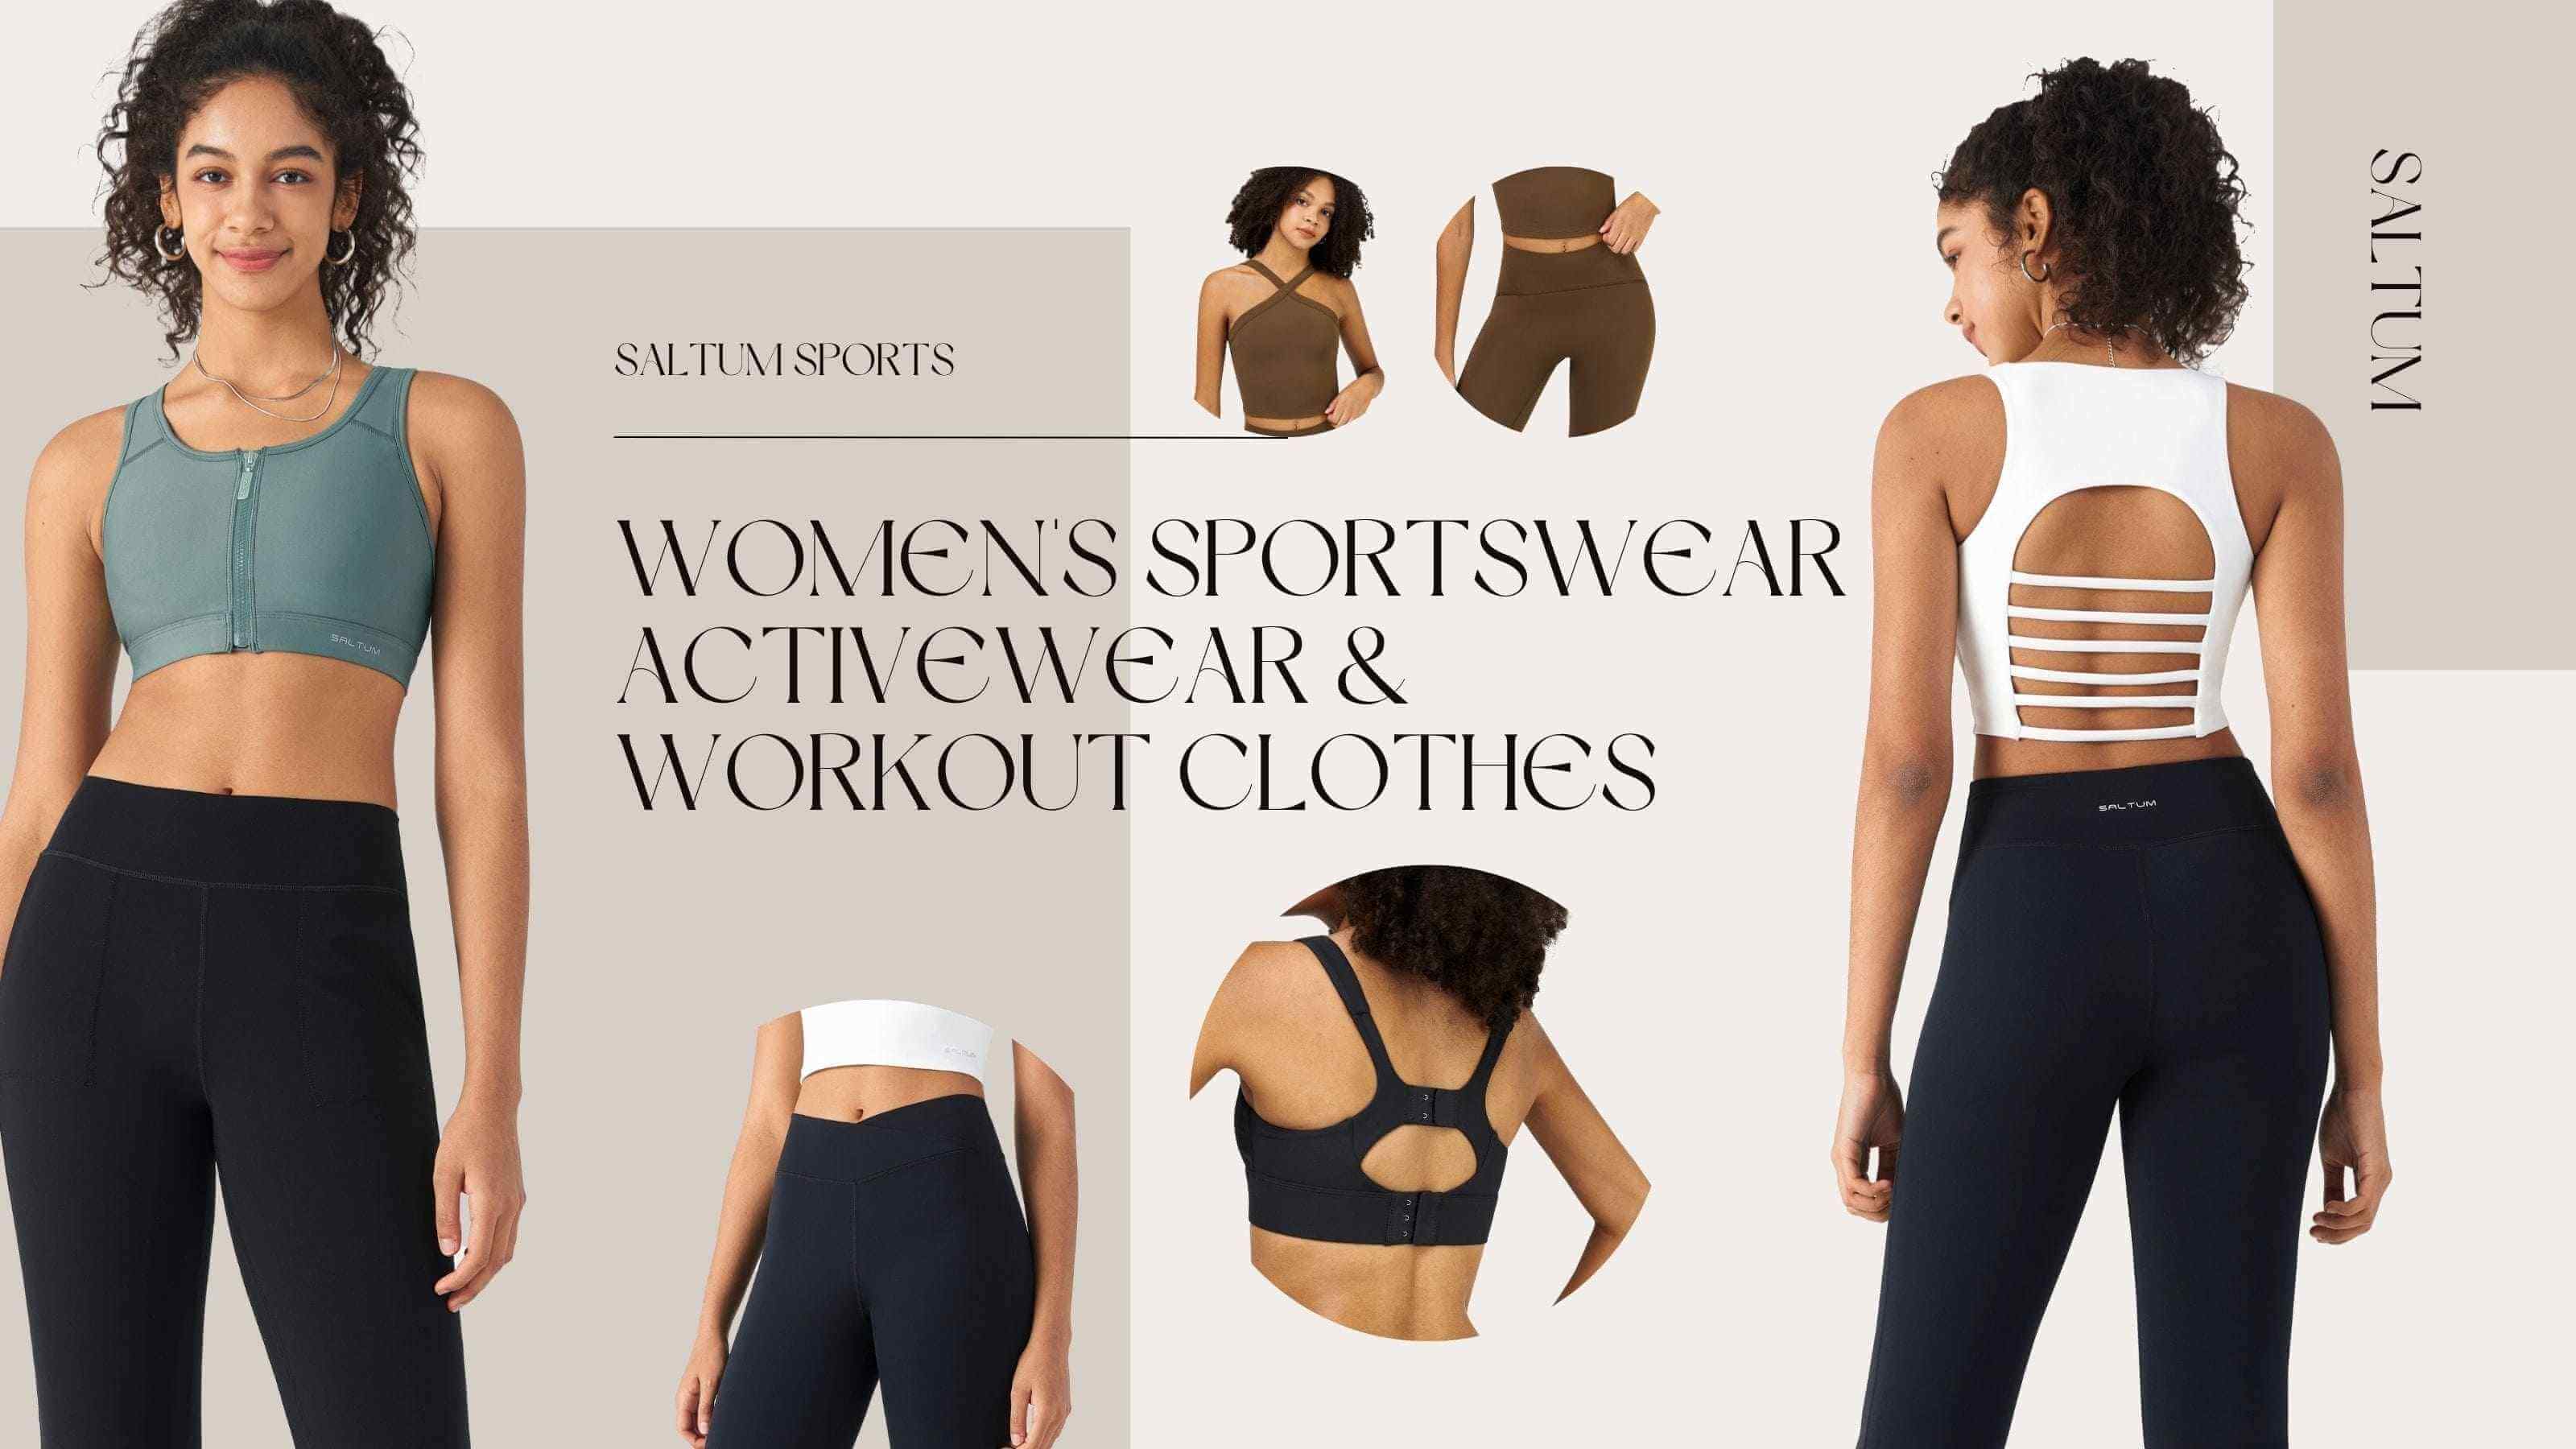 SALTUM SPORTS: Women's Sportswear, Activewear & Workout Clothes